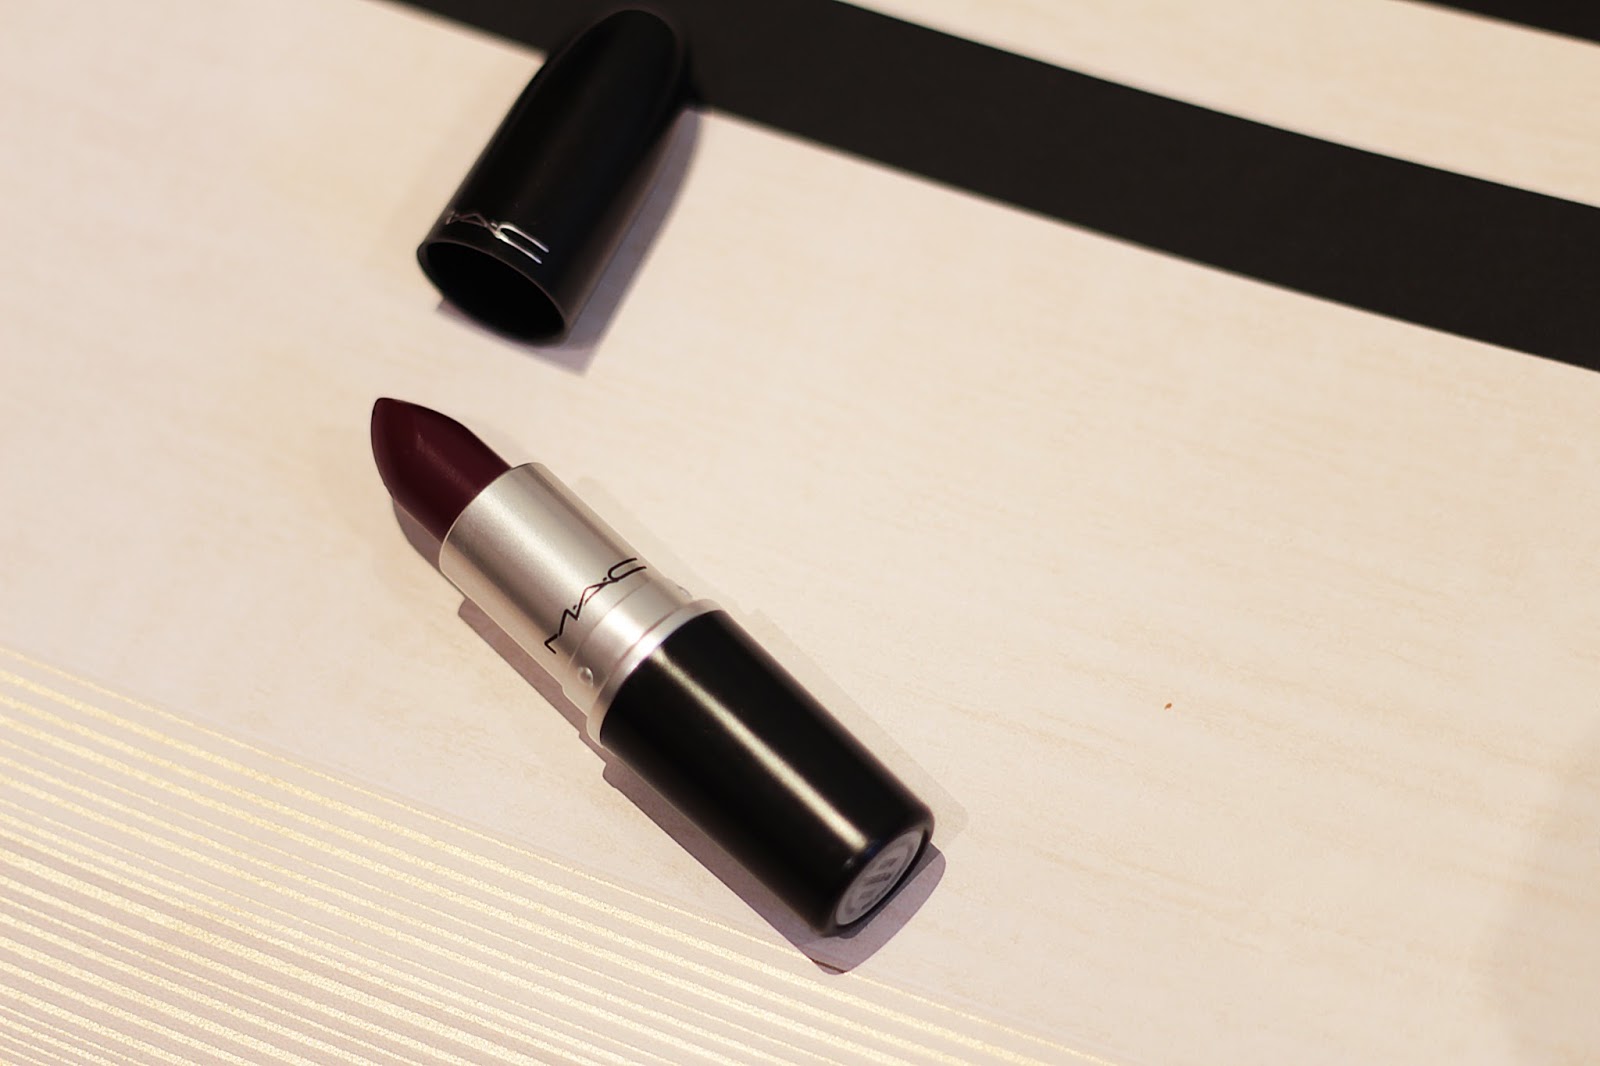 REBEL mac lipstick first impressions